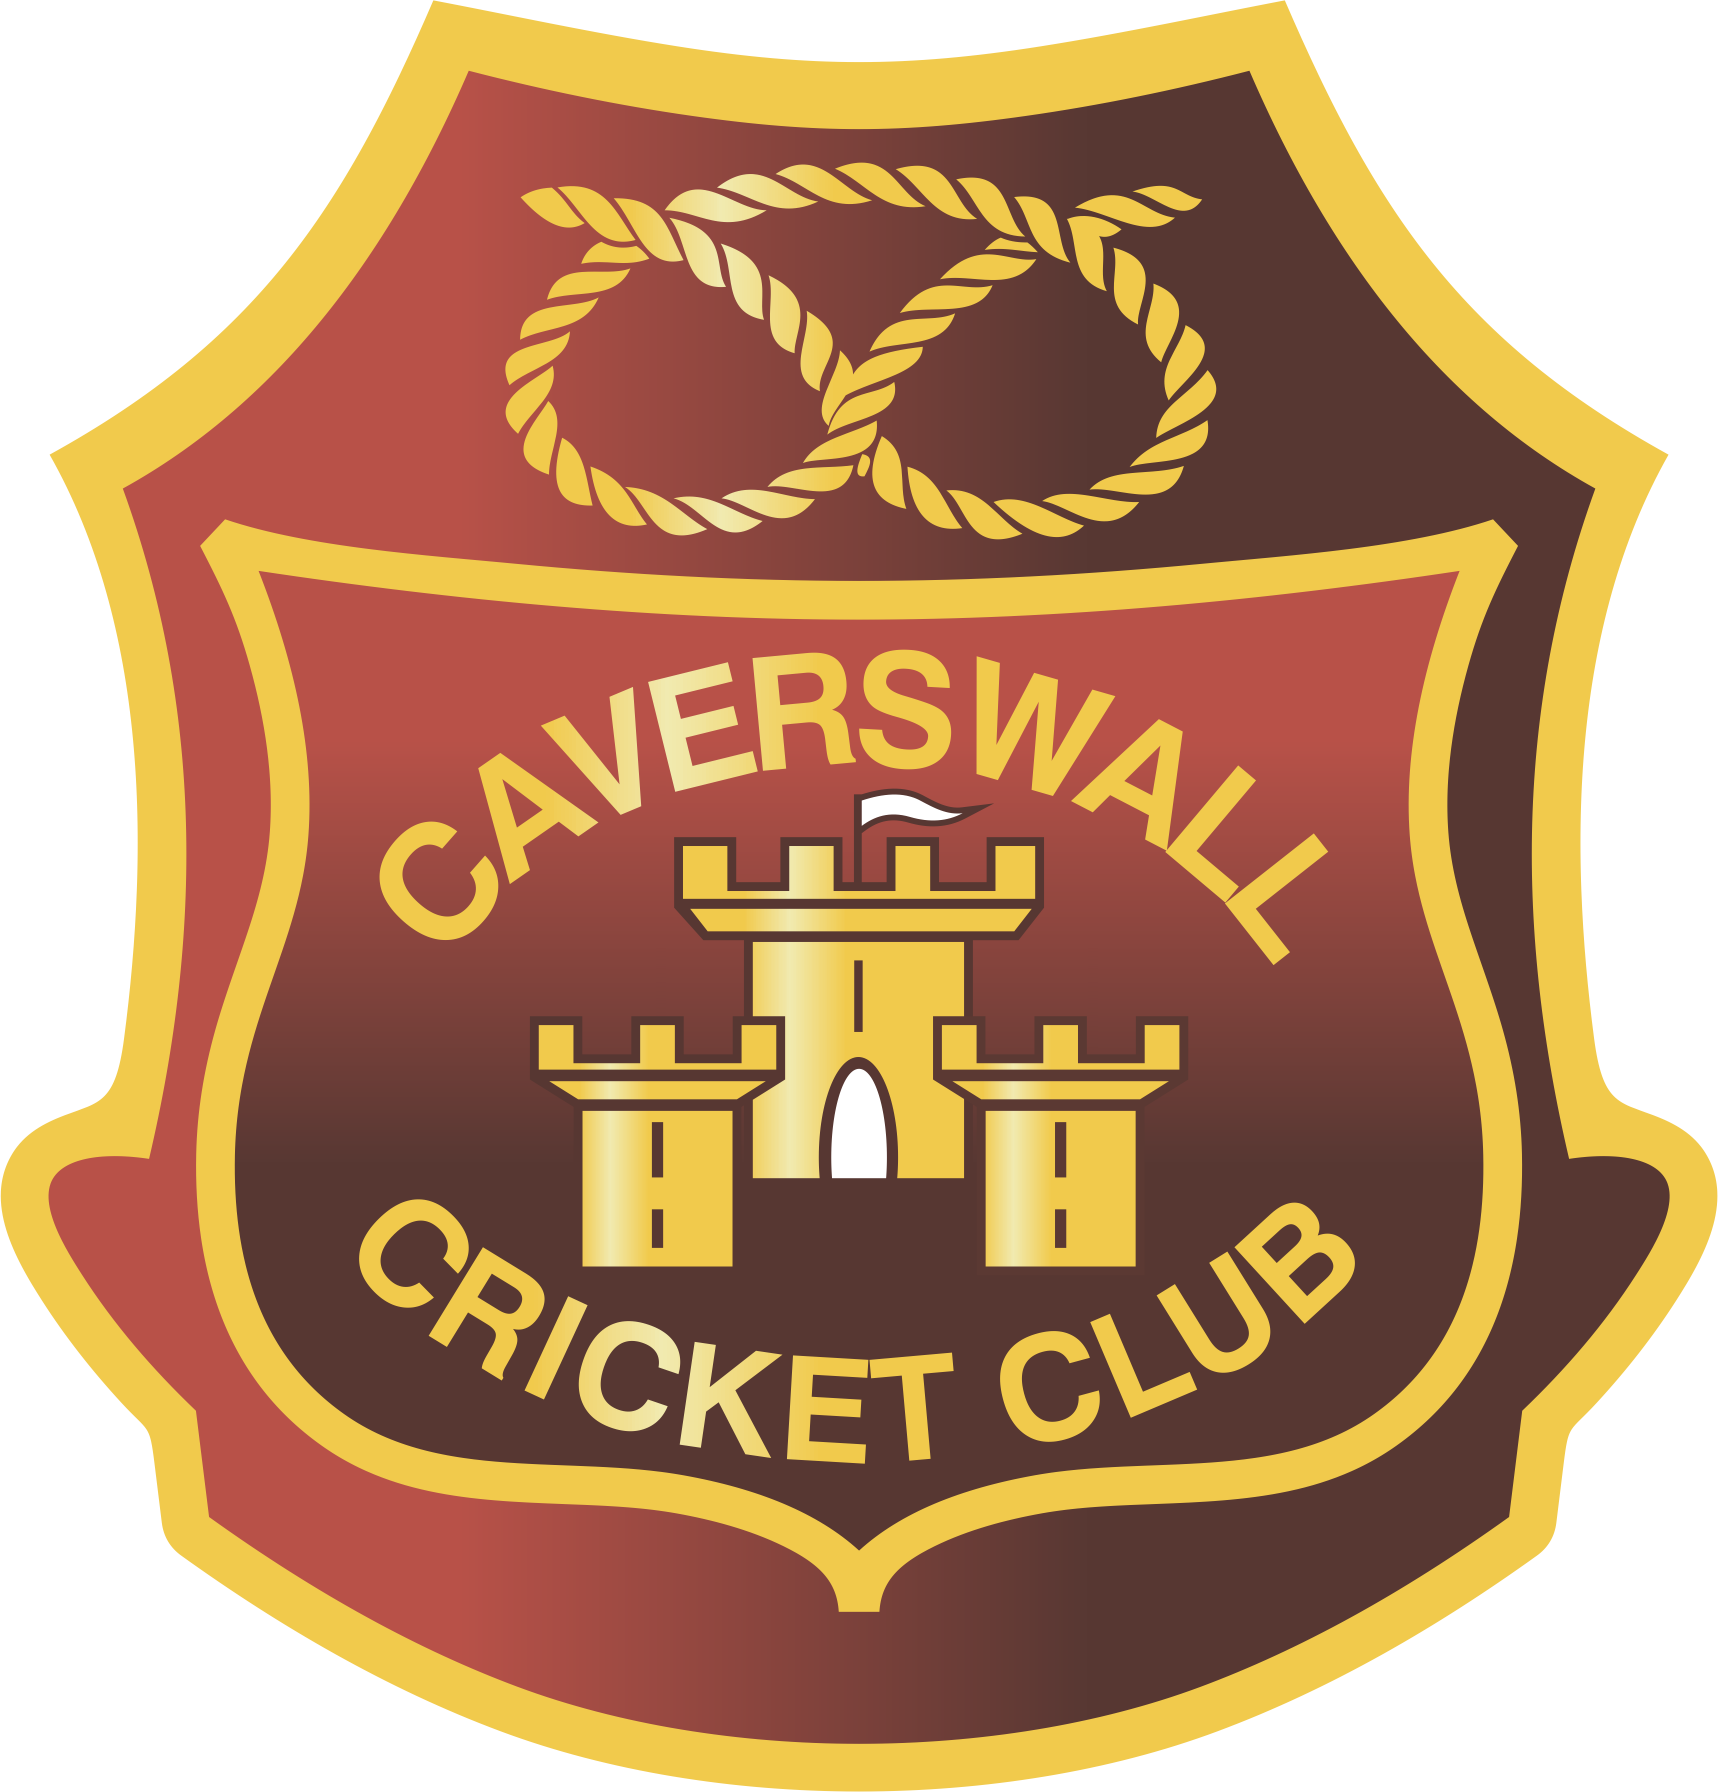 Caverswall CC (Junior Section) Teamwear